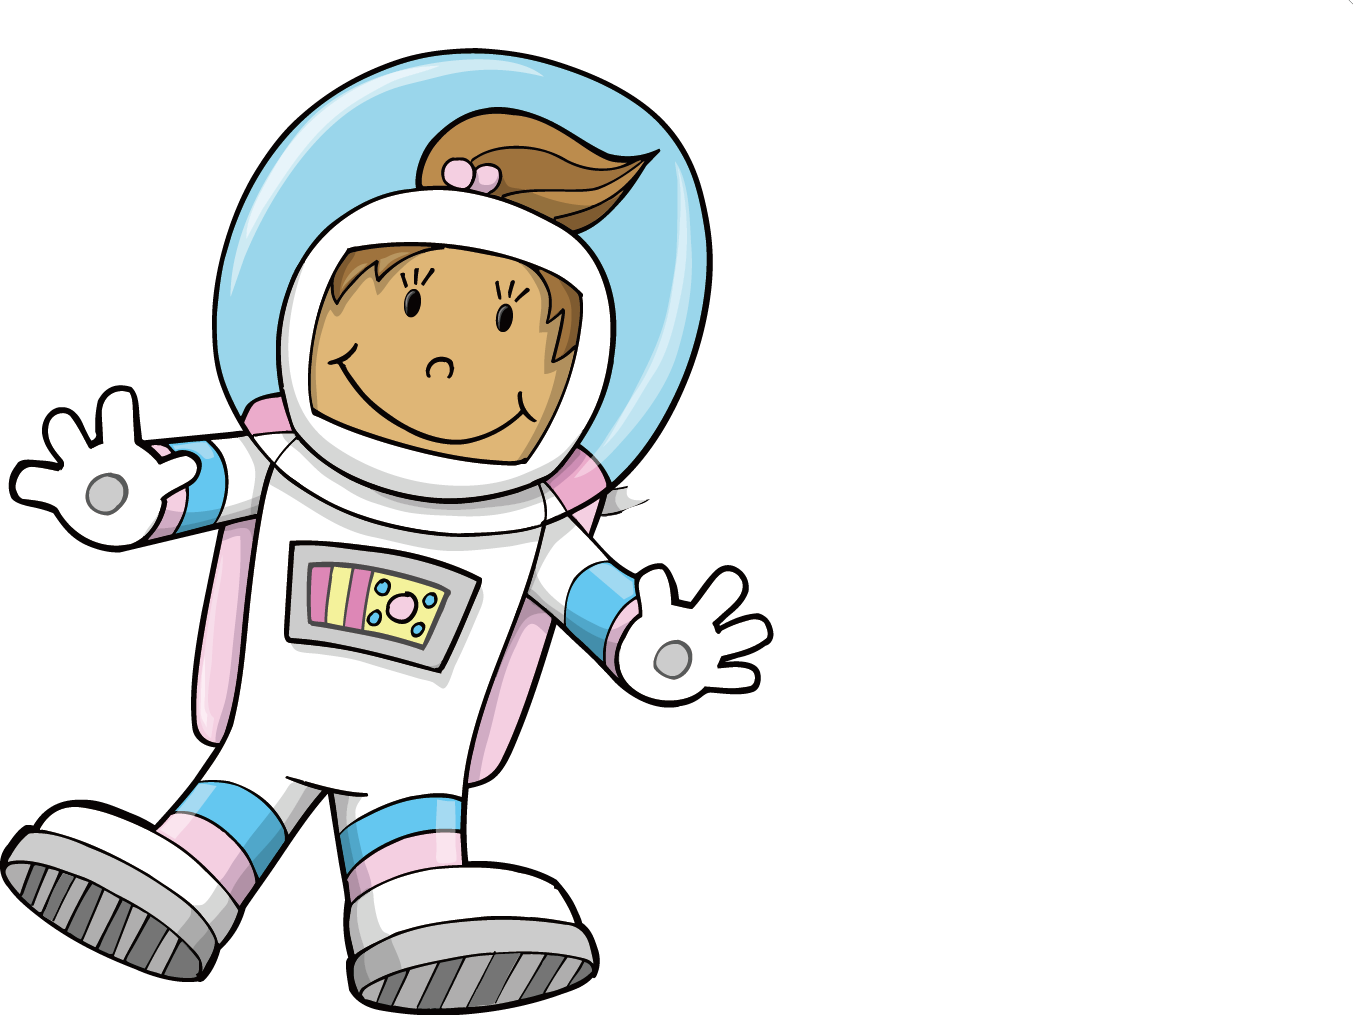 Creative clipart human. Astronaut cartoon space suit